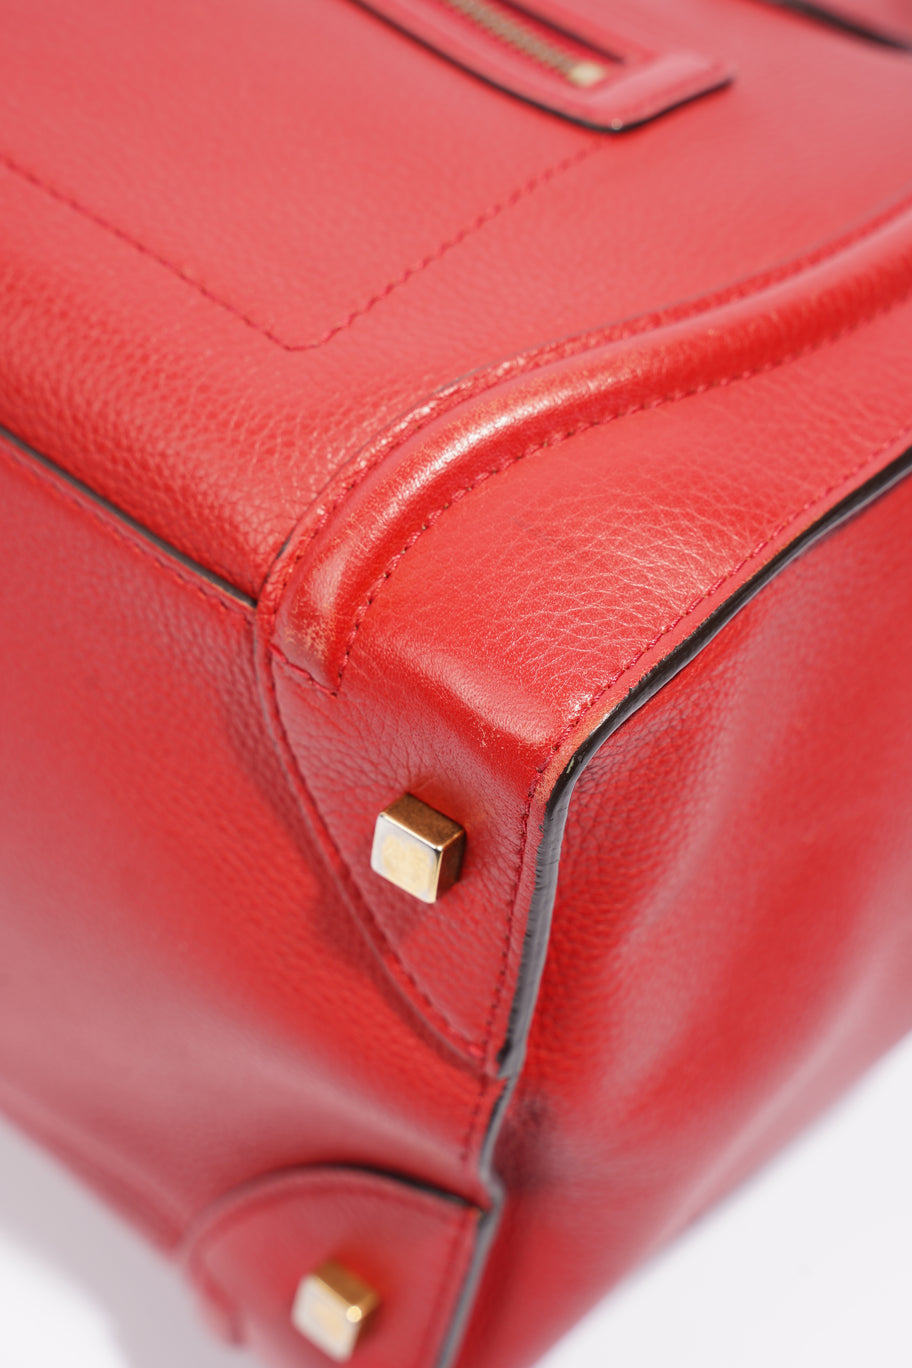 Mini Luggage Tote Red Calfskin Leather Image 14